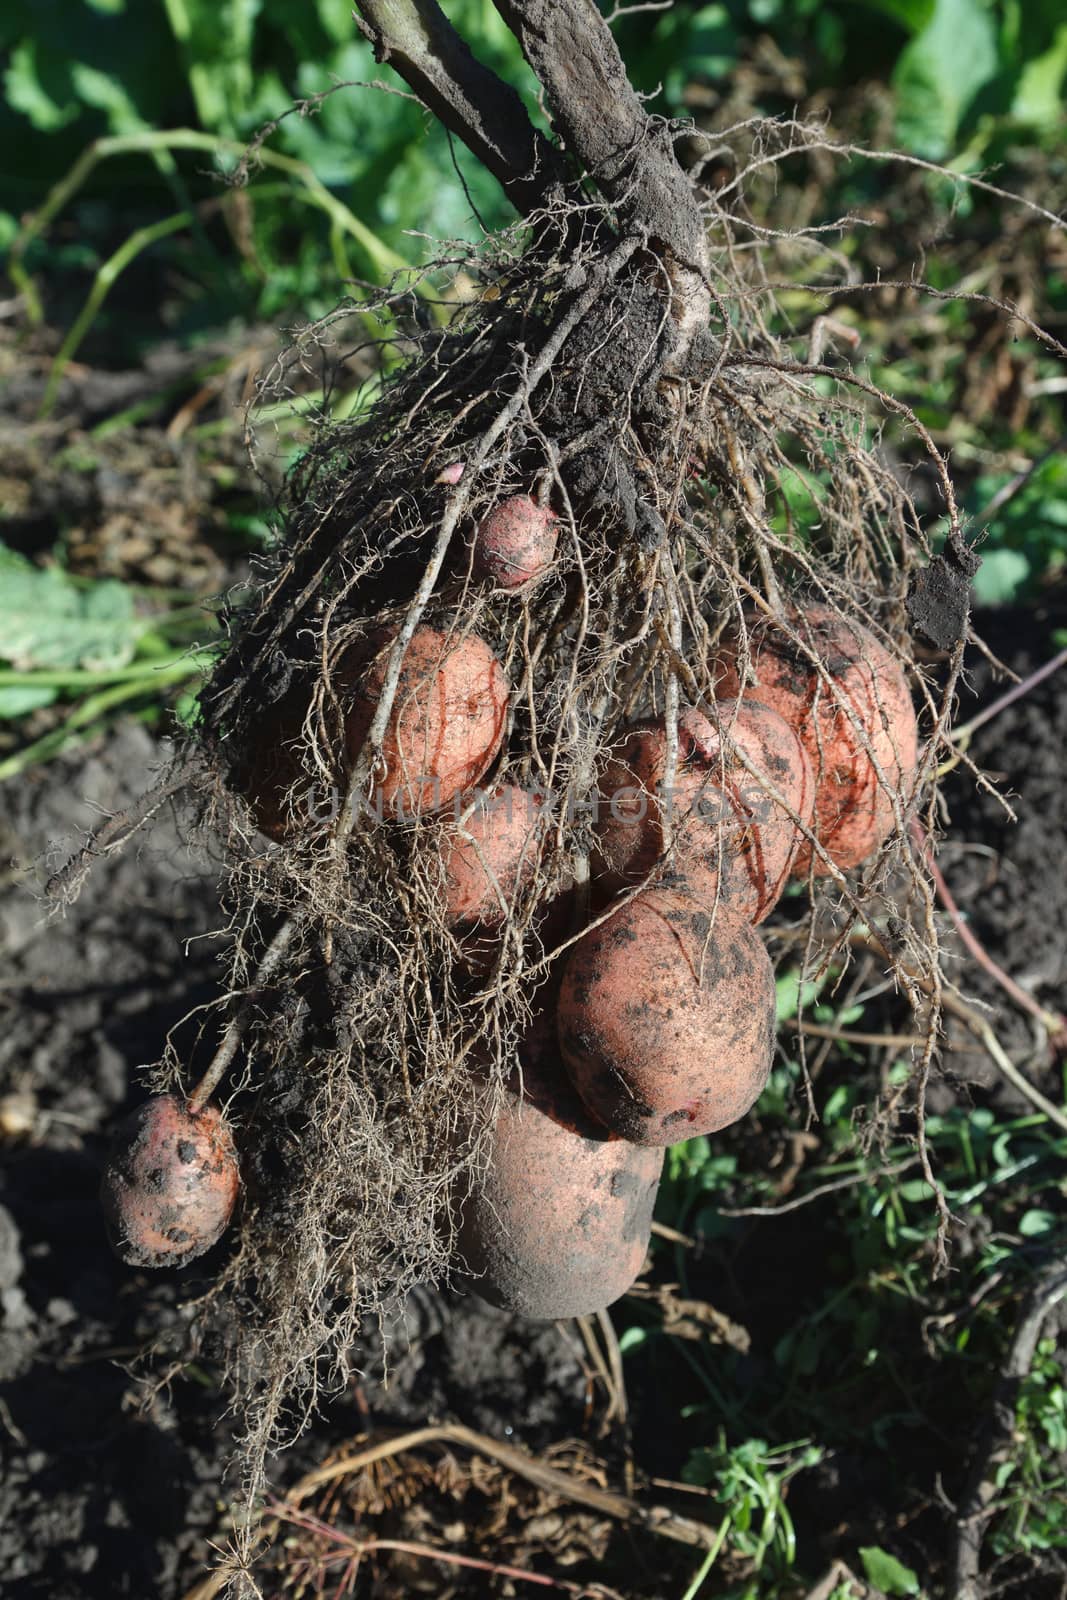 Digging potatoes by Ohotnik